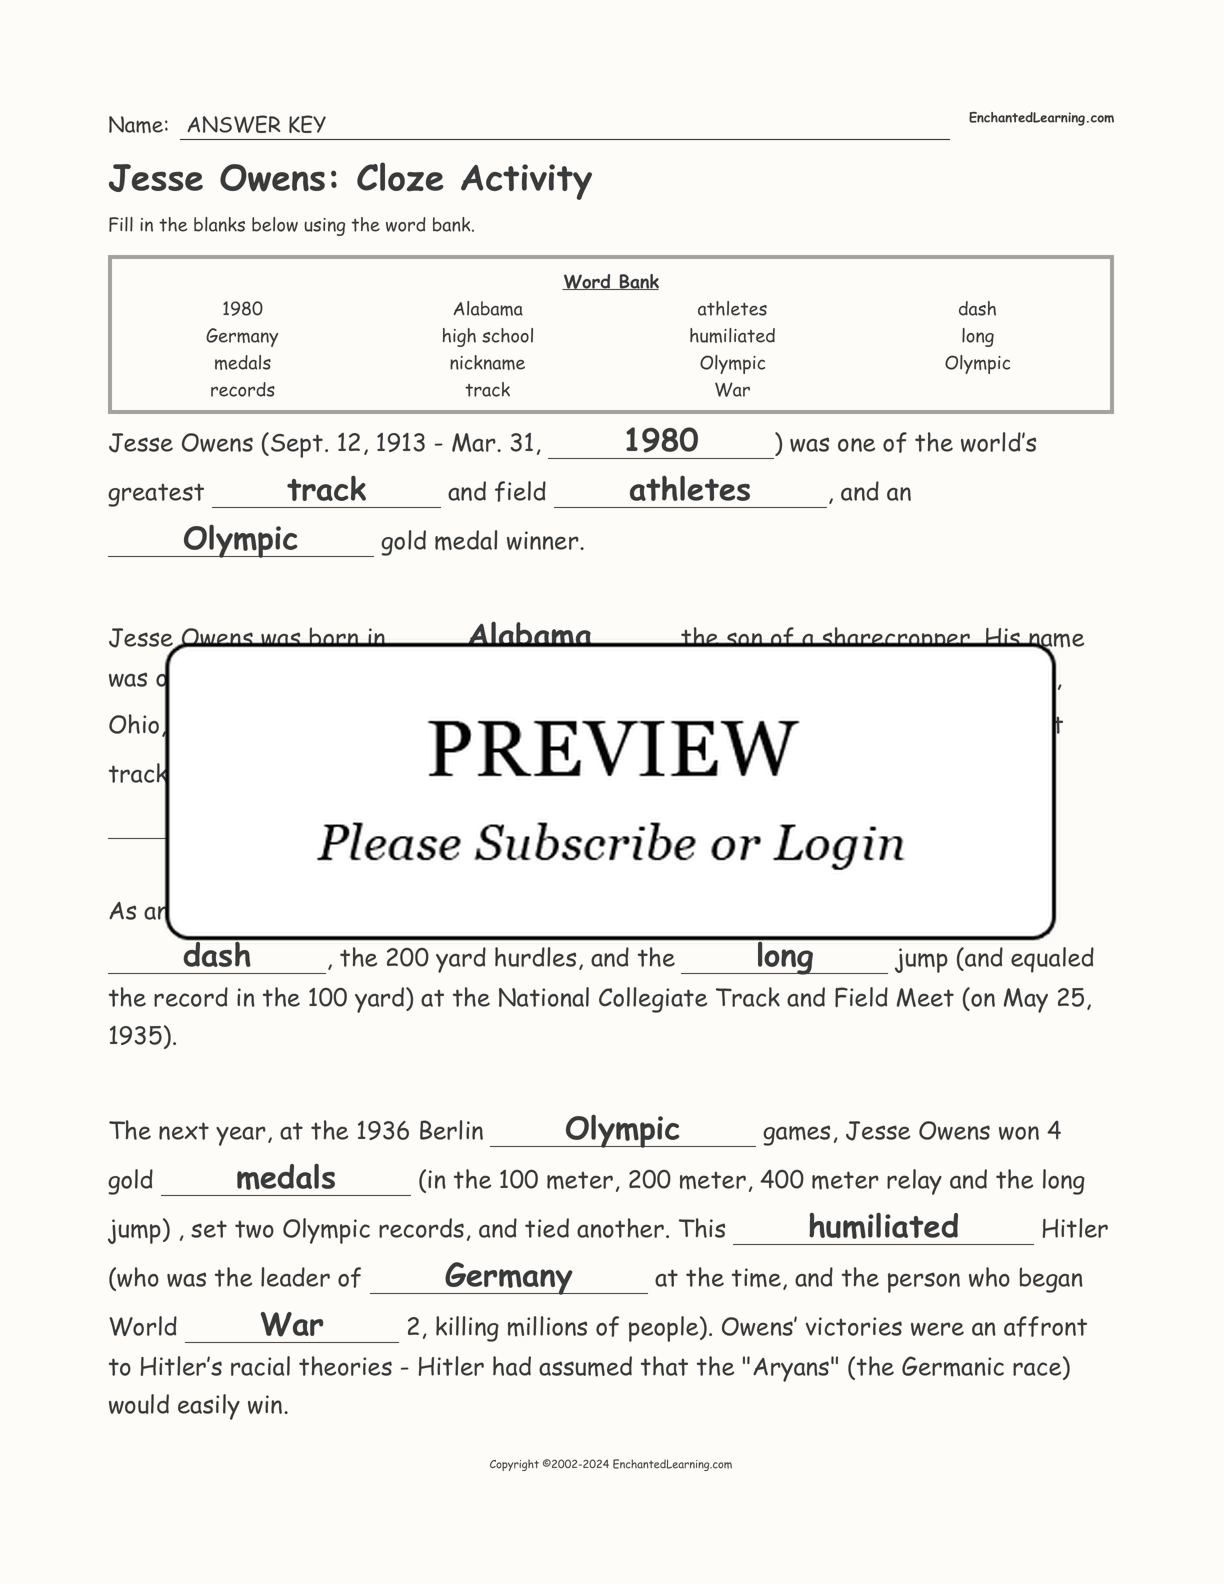 Jesse Owens: Cloze Activity interactive worksheet page 2